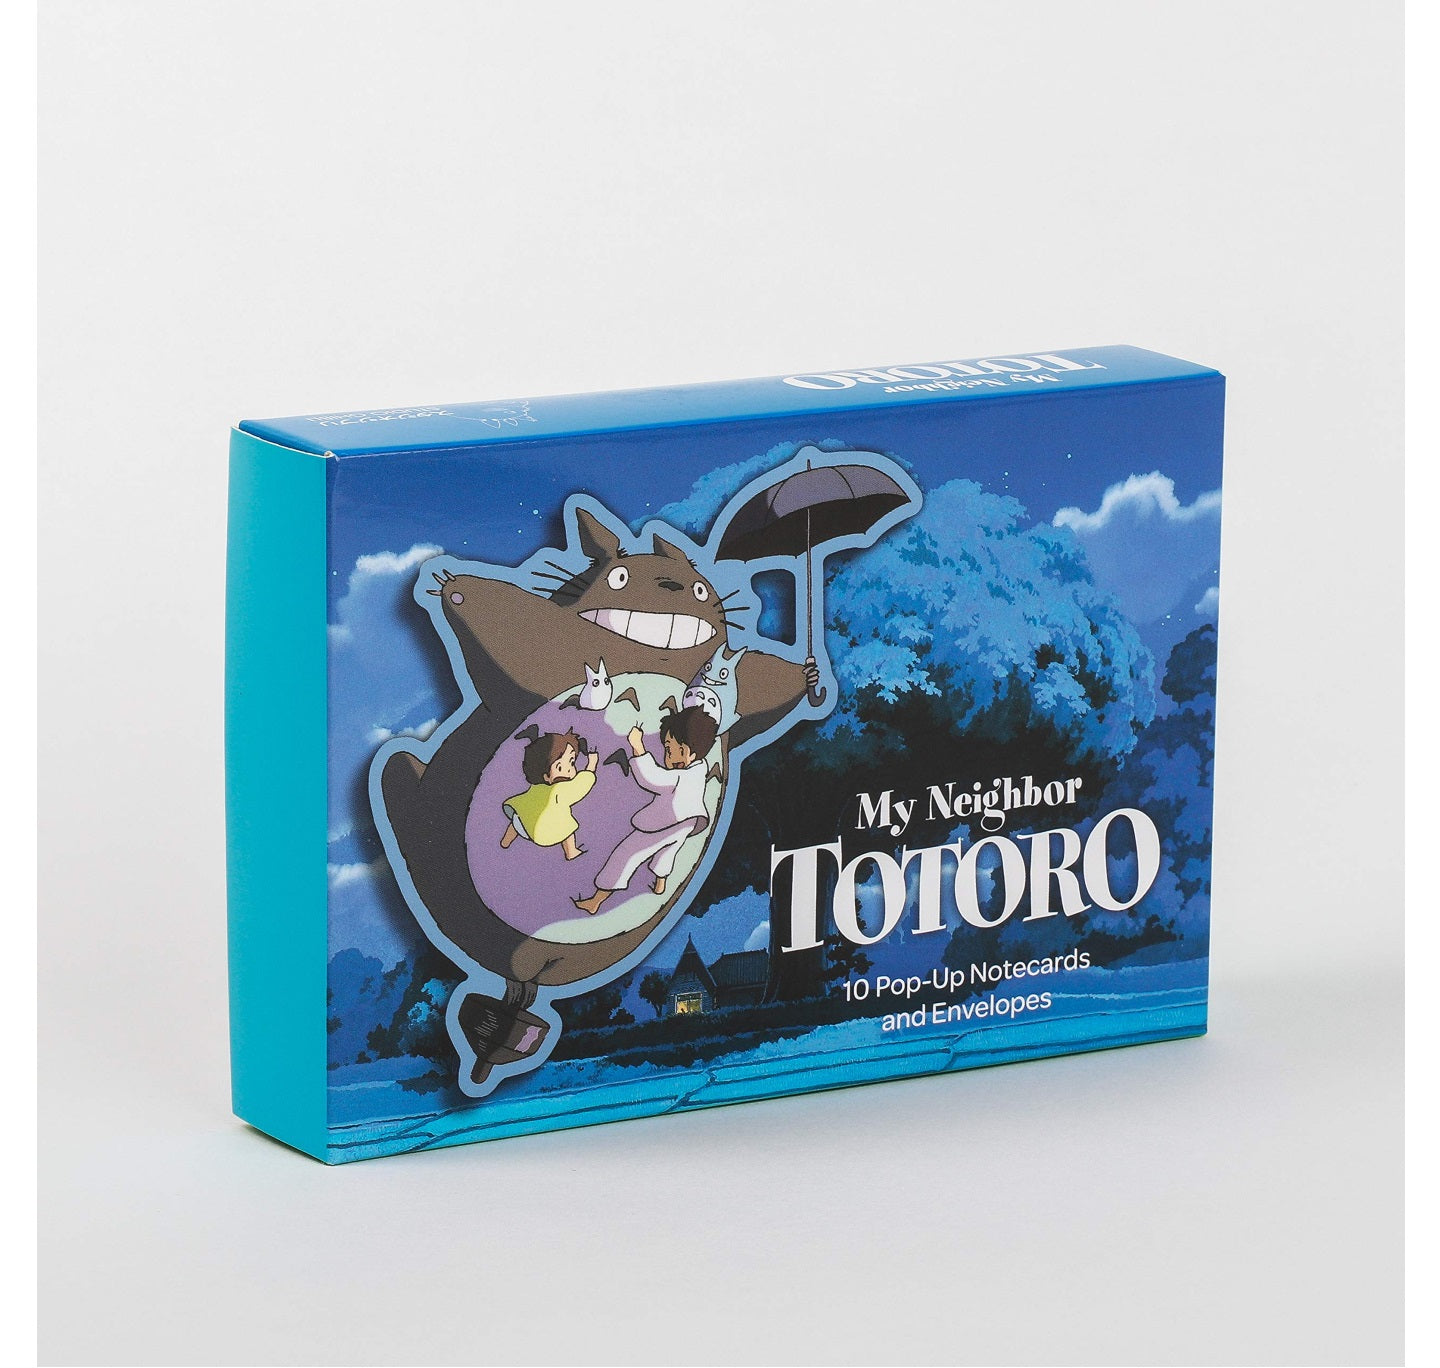 My Neighbor Totoro: Pop-Up Notecards